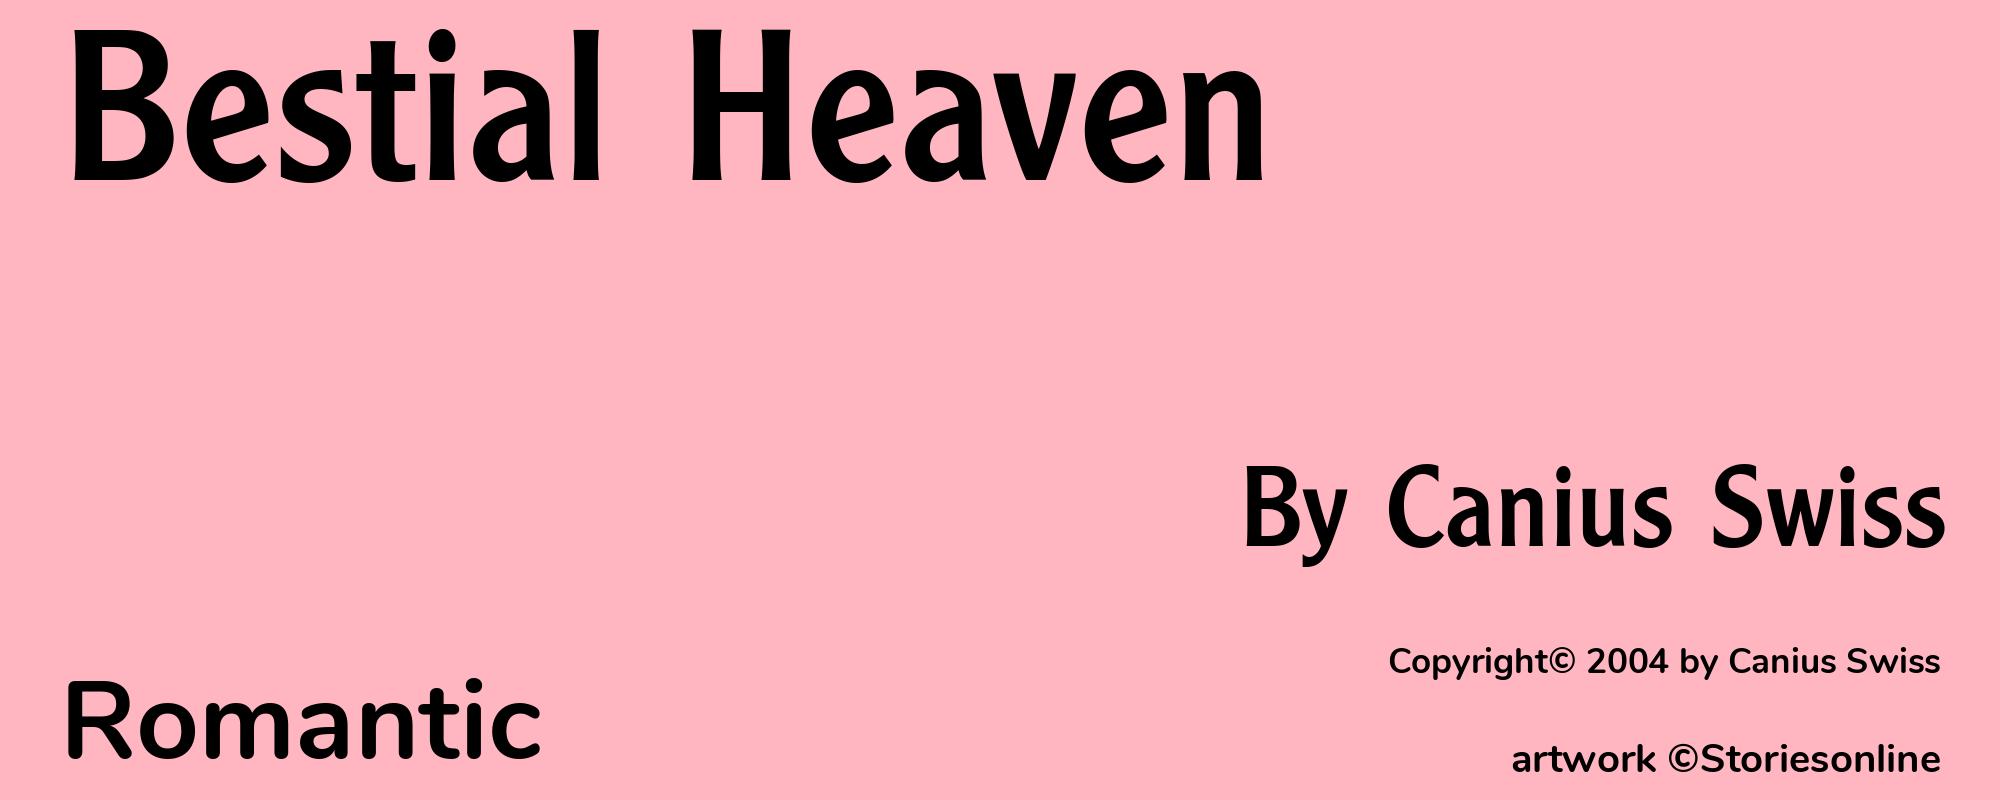 Bestial Heaven - Cover